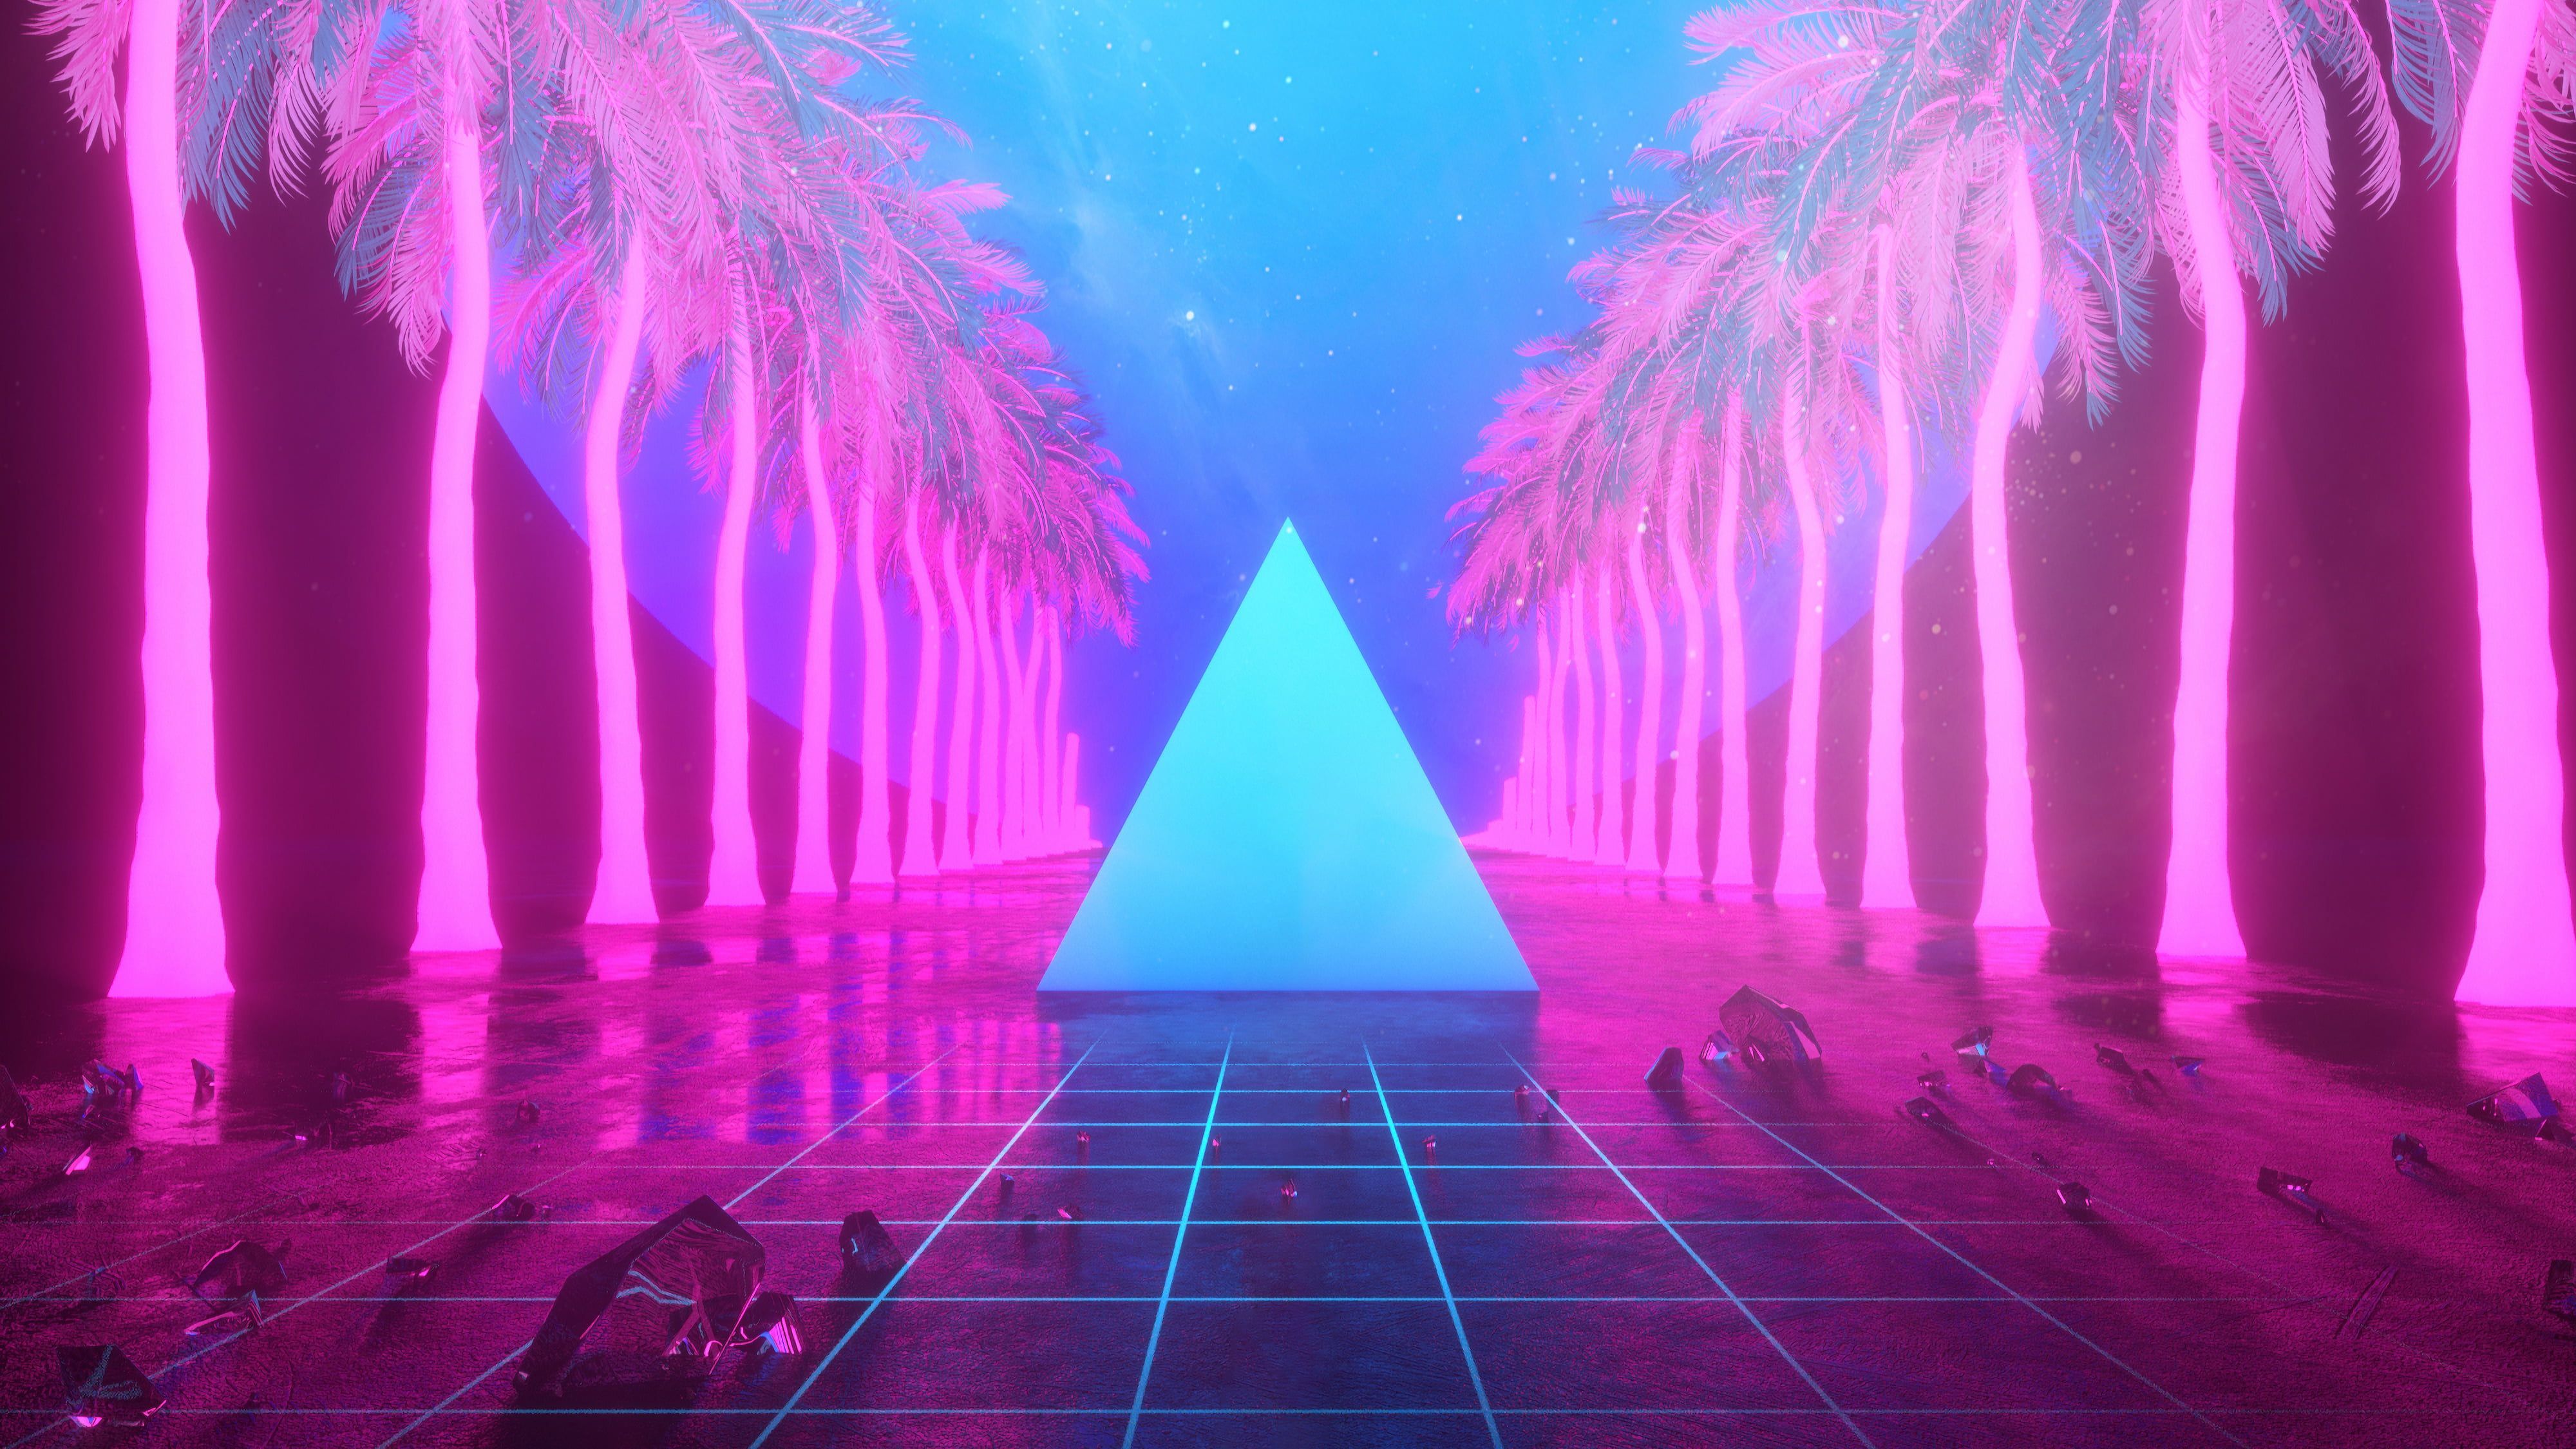 abstract #pyramid Retro style #reflection palm trees #stars